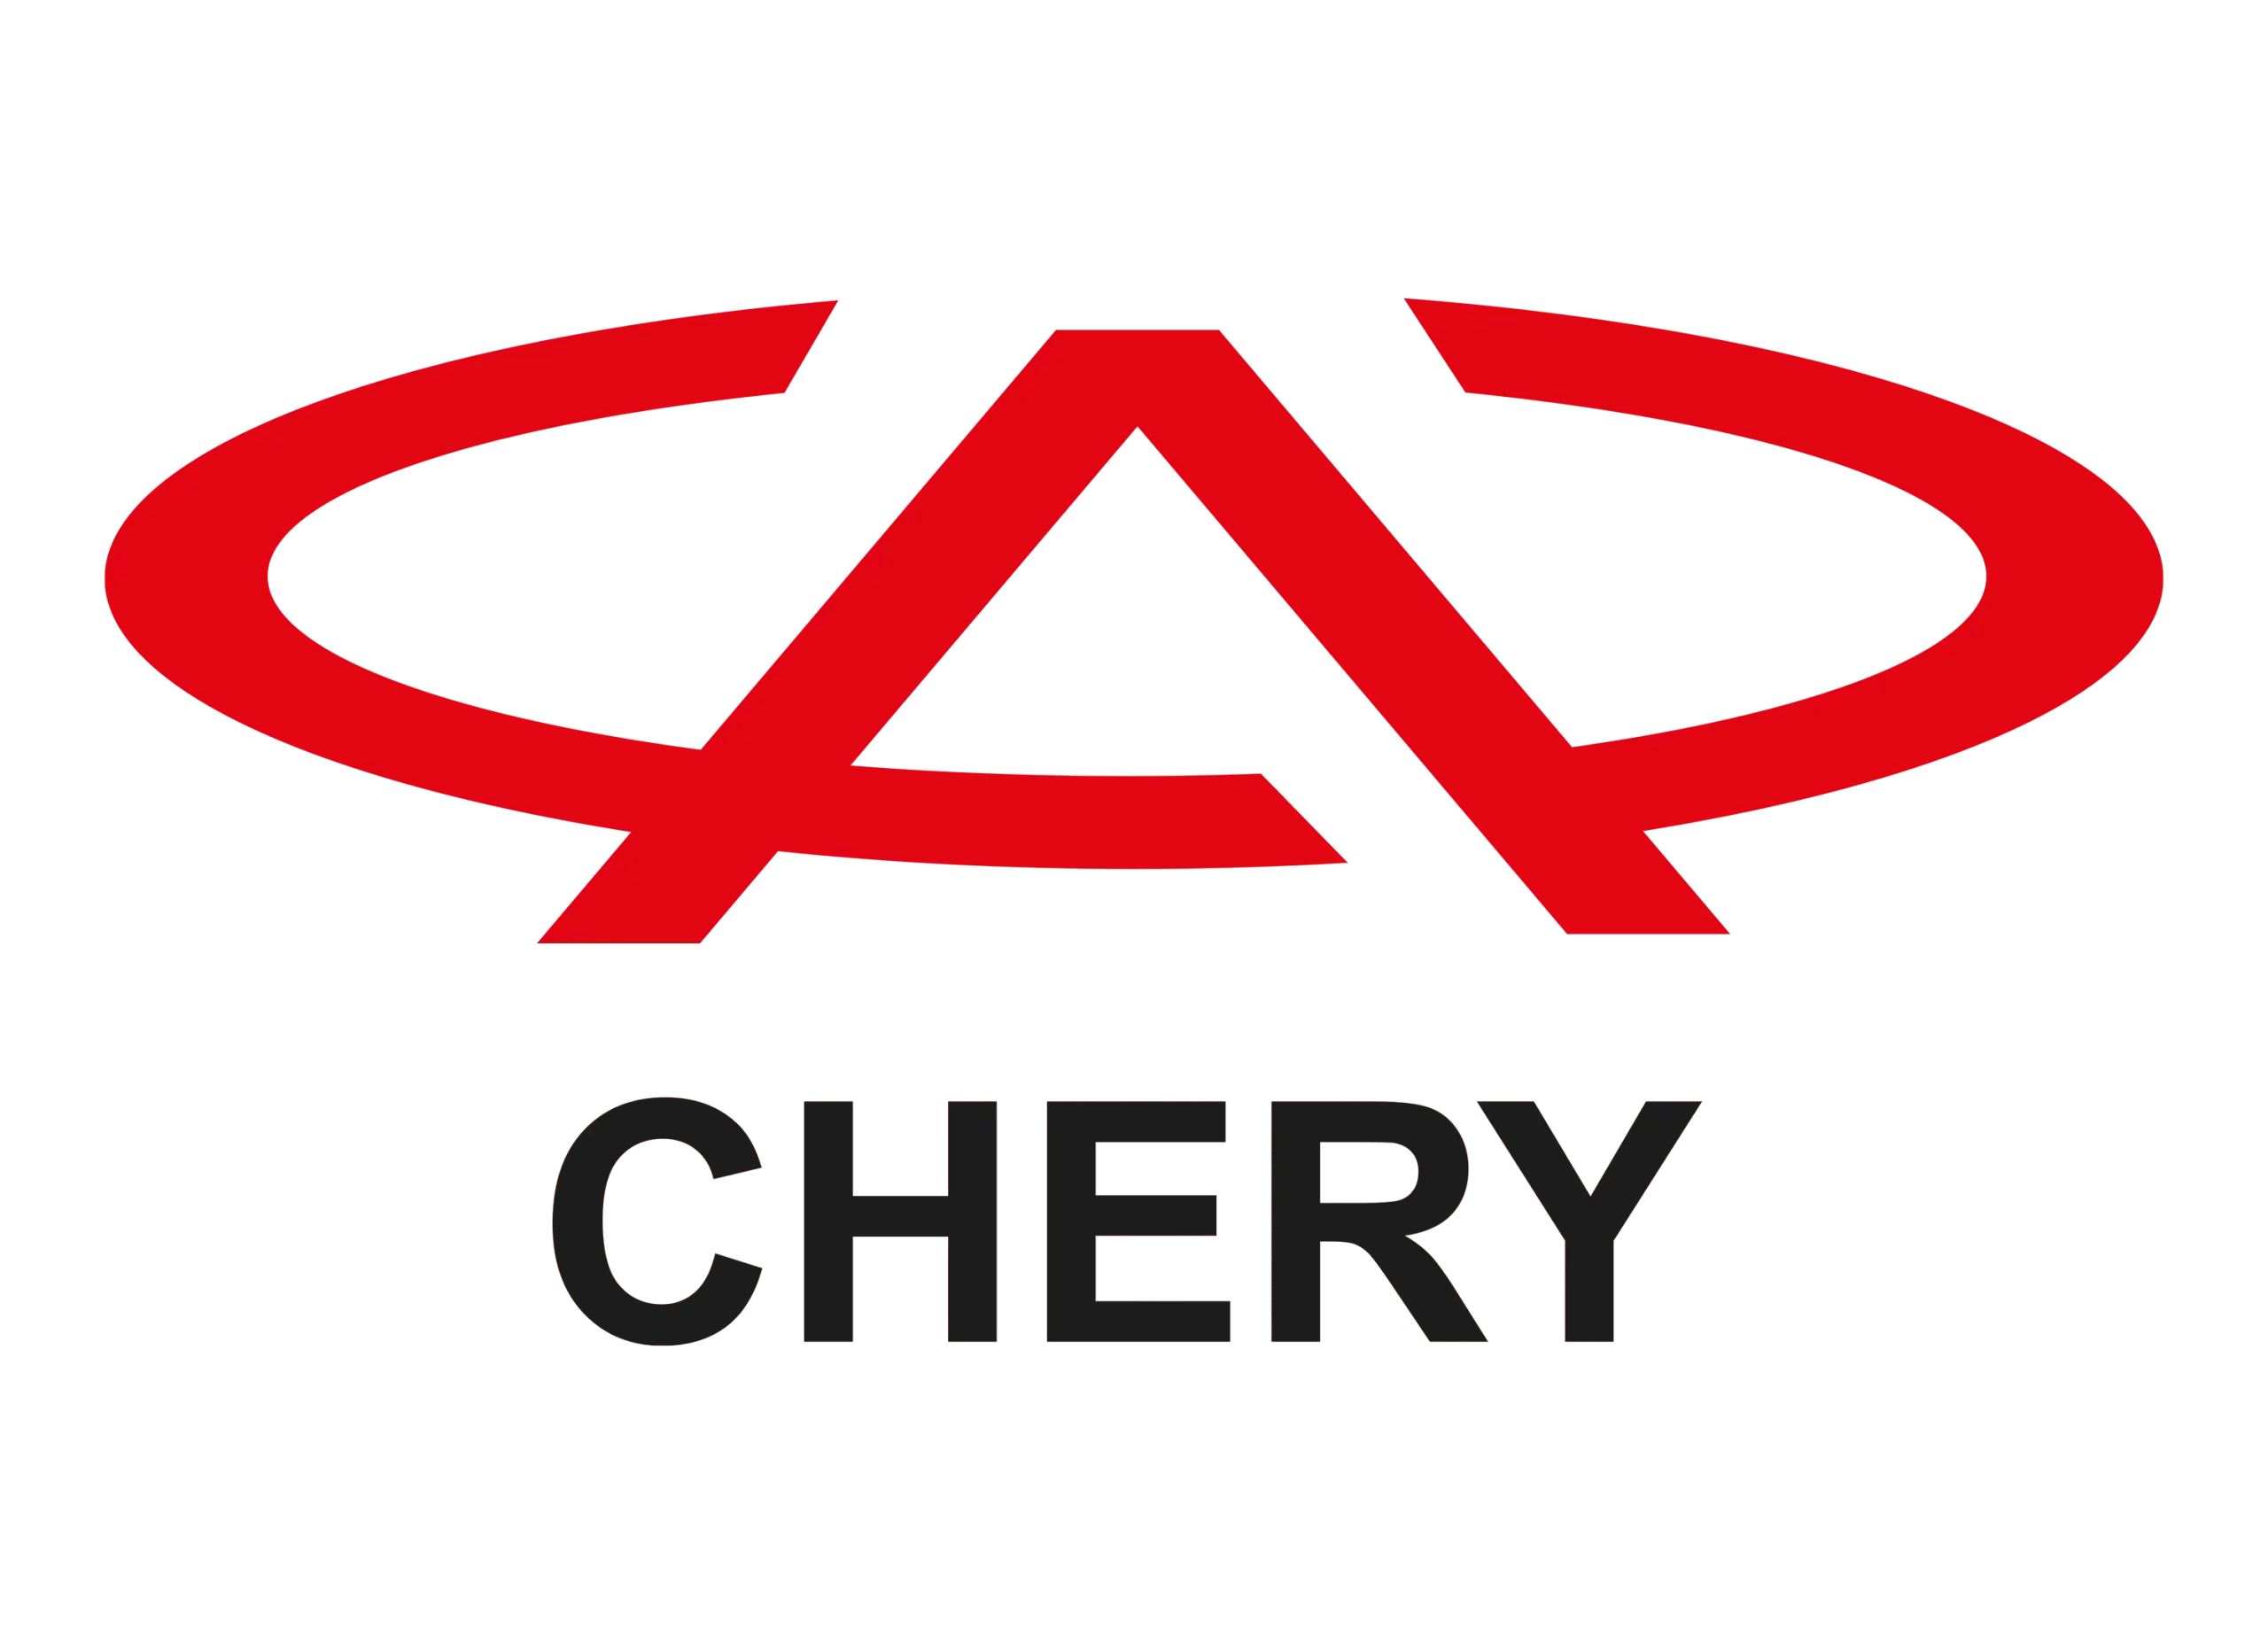 Chery logo 1997-2001